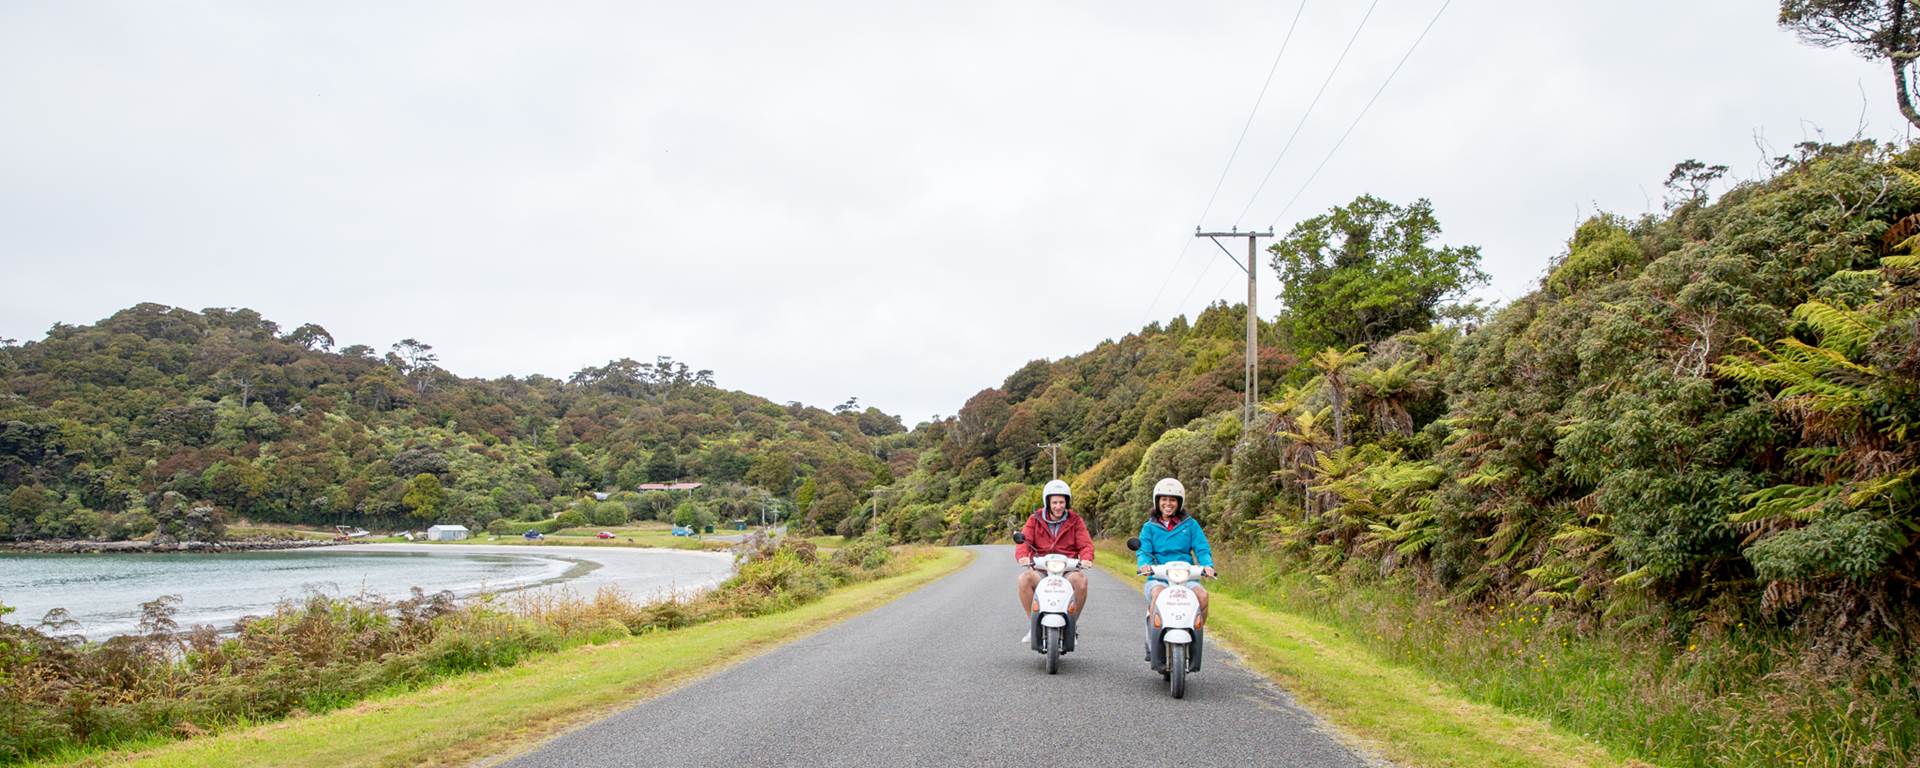 Two people on scooter on Stewart Island coastal road